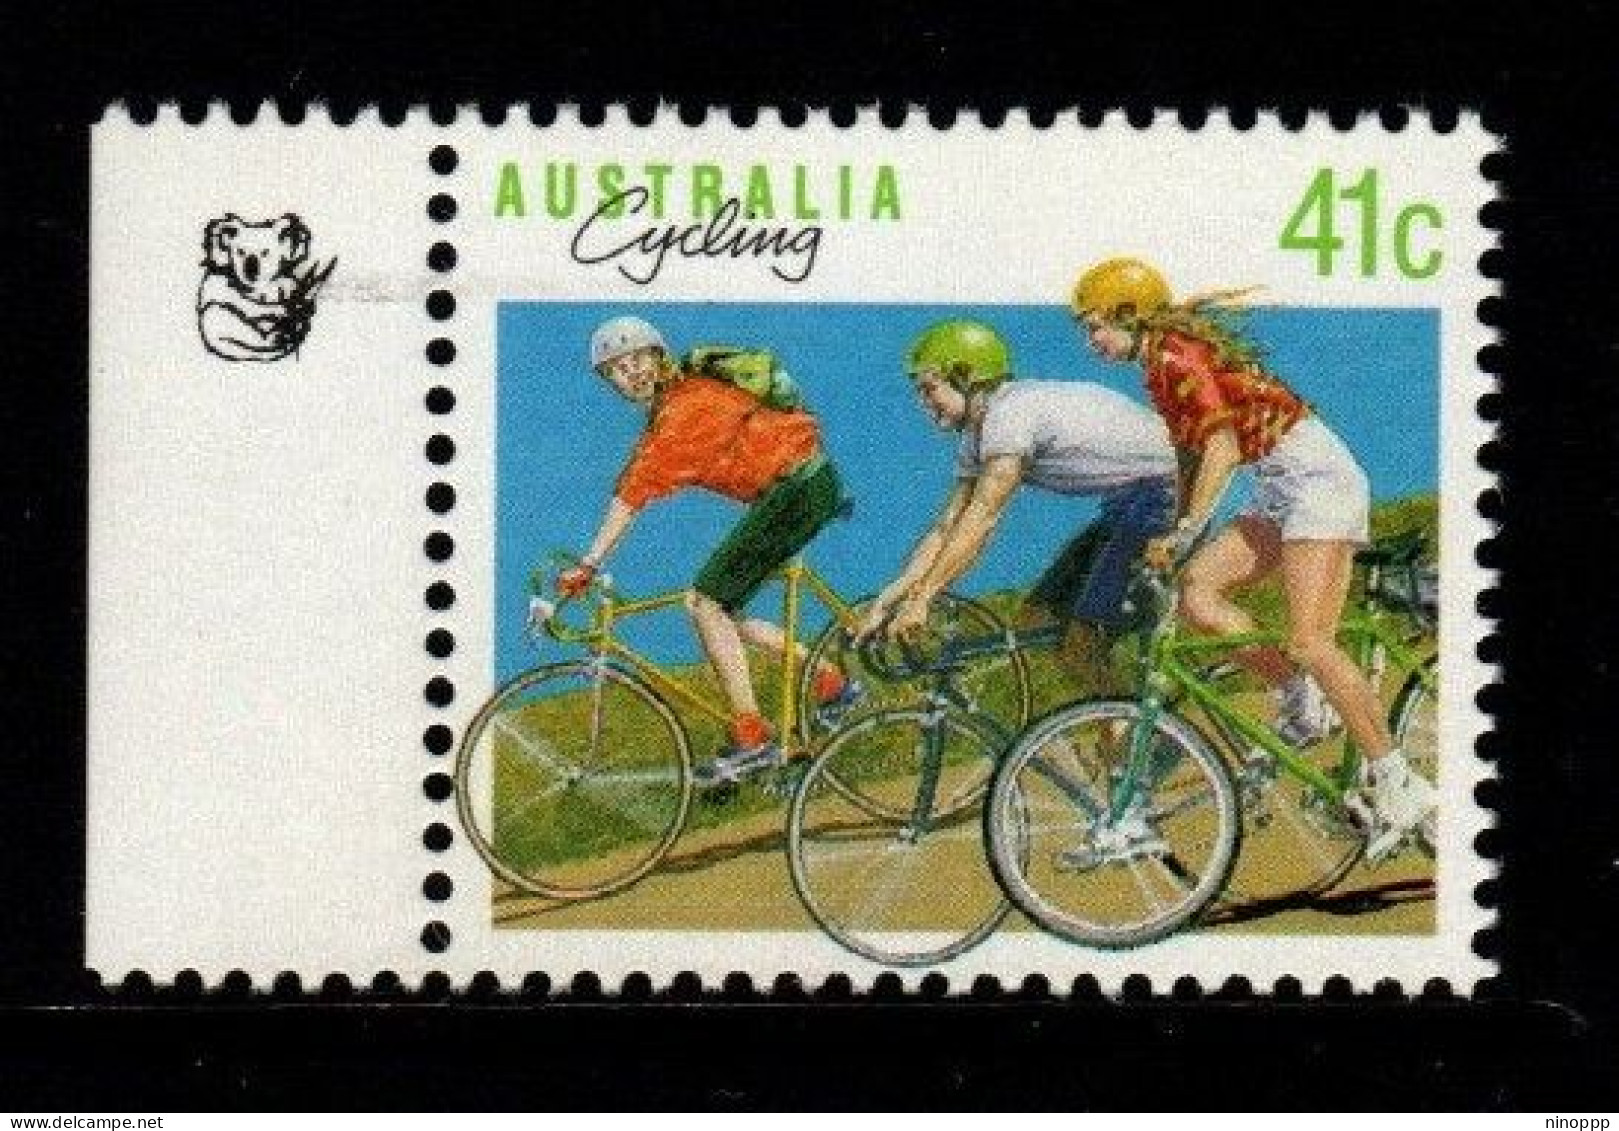 Australia Cat 1208b  Sports 41c Cycling, 1 Koalas Reprint,mint Never Hinged - Ensayos & Reimpresiones